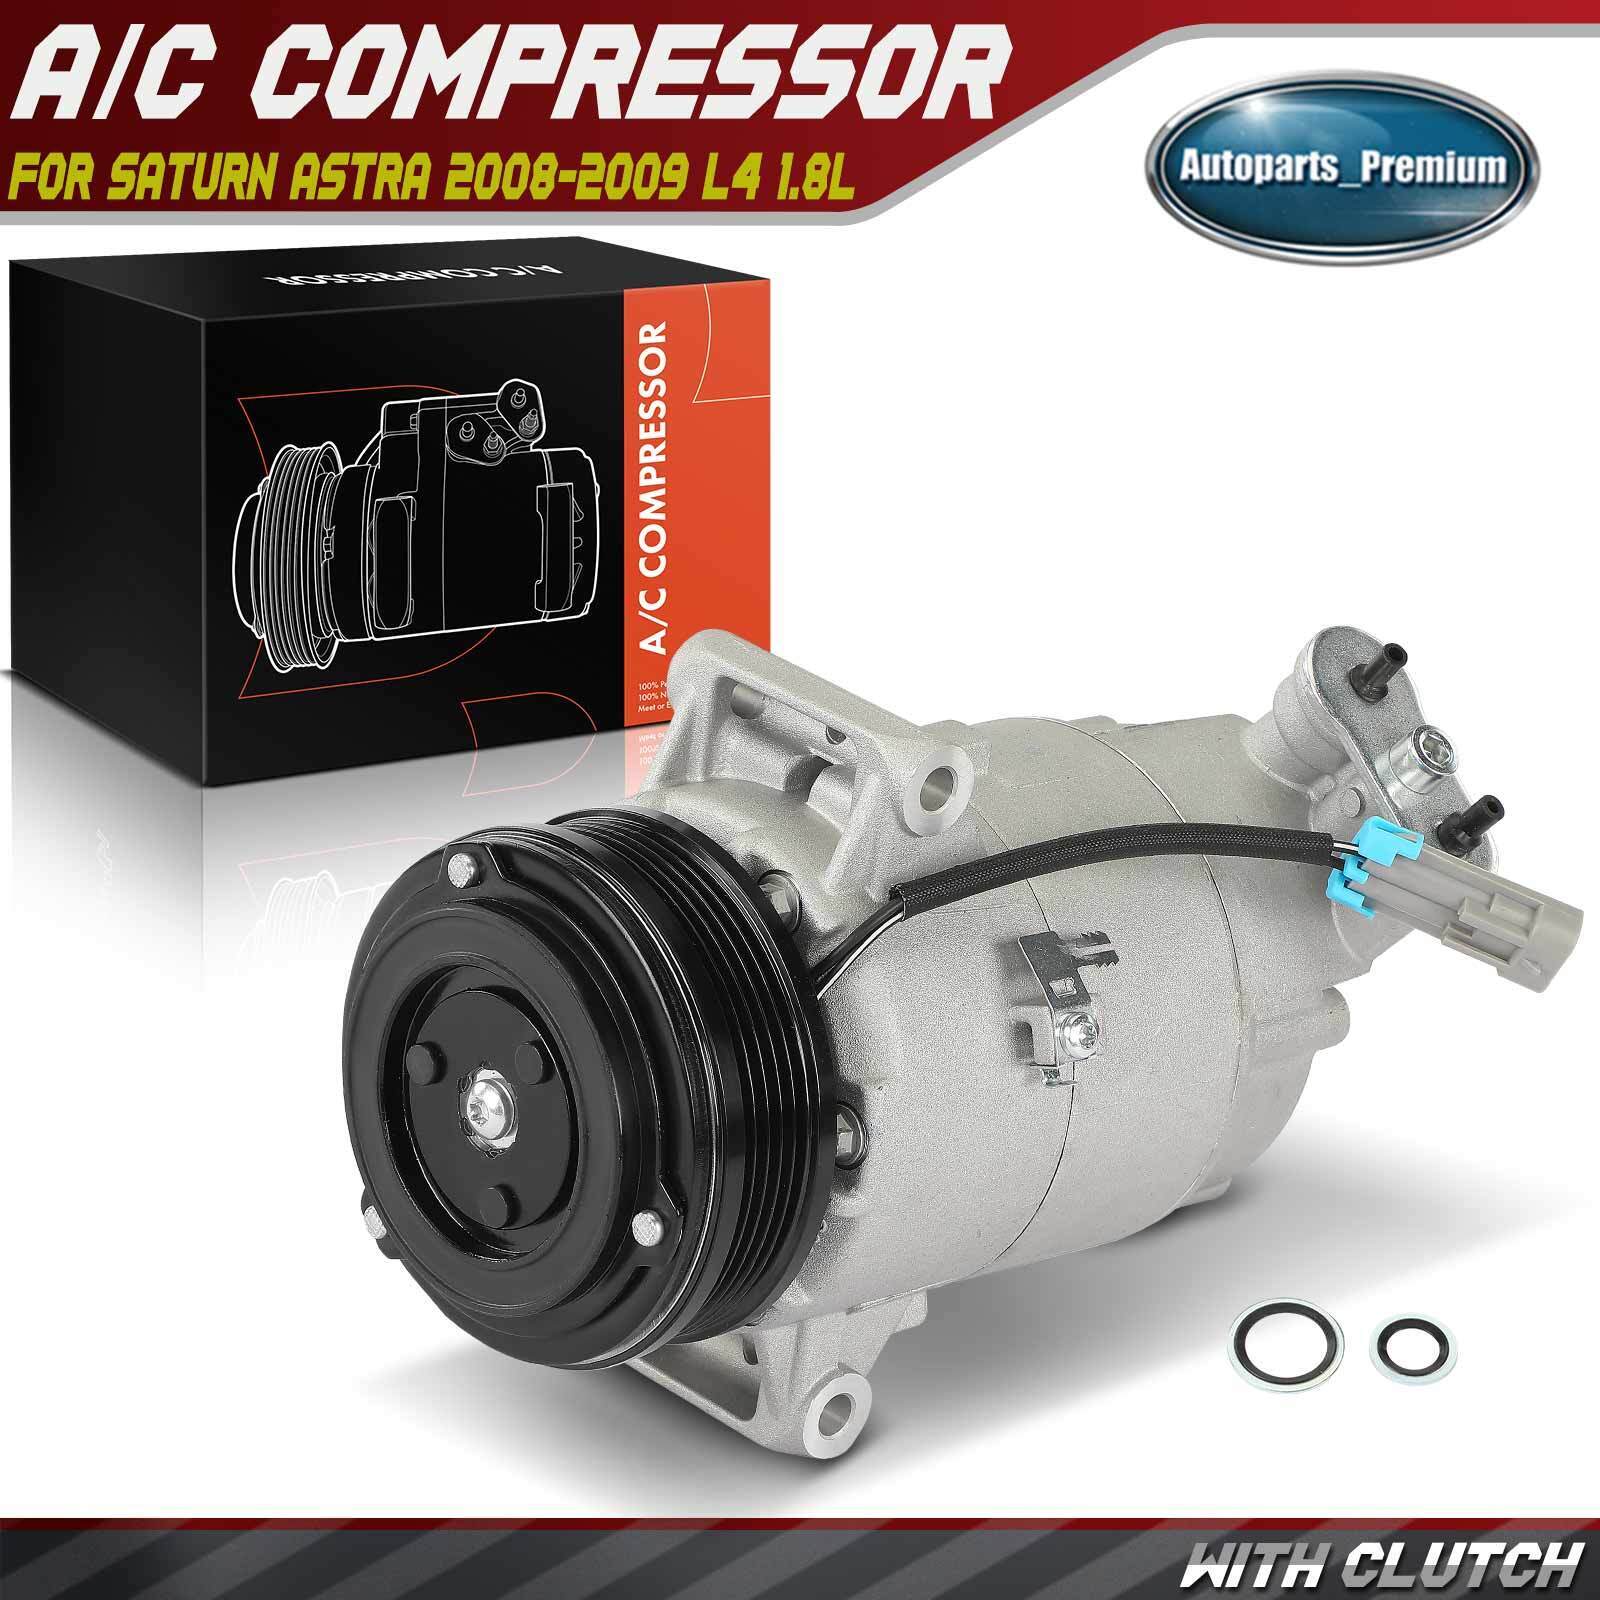 1x New AC Compressor w/ Clutch for Saturn Astra 2008-2009 CVC 2 Pins 94711789